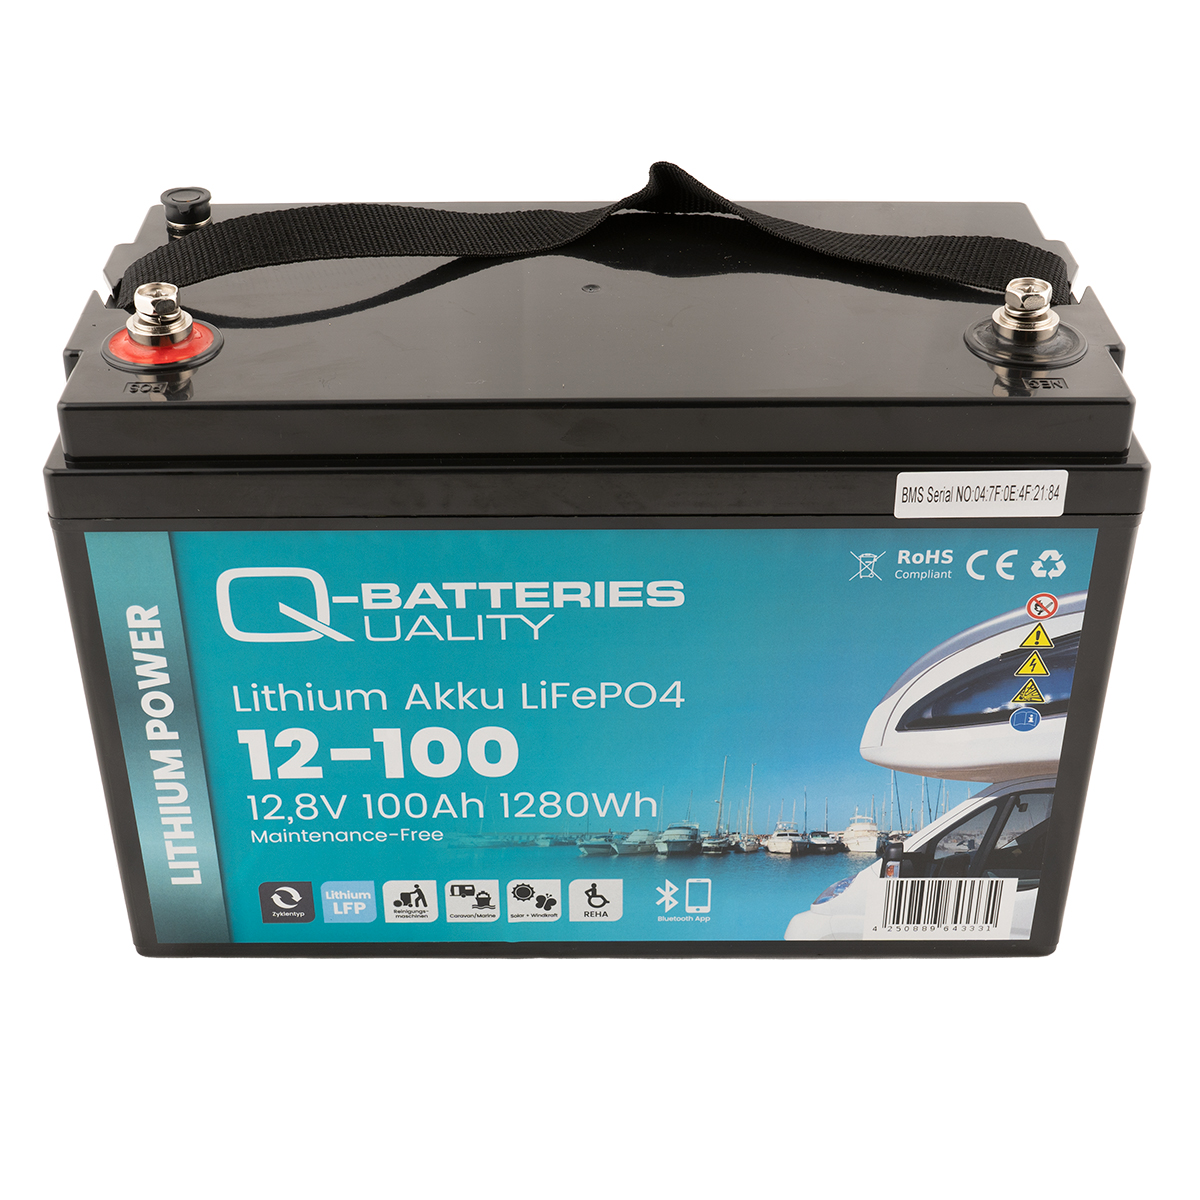 Q-Batteries Lithium Akku 12-100 12,8V 100Ah 1280Wh LiFePO4 Batterie mit Bluetooth  